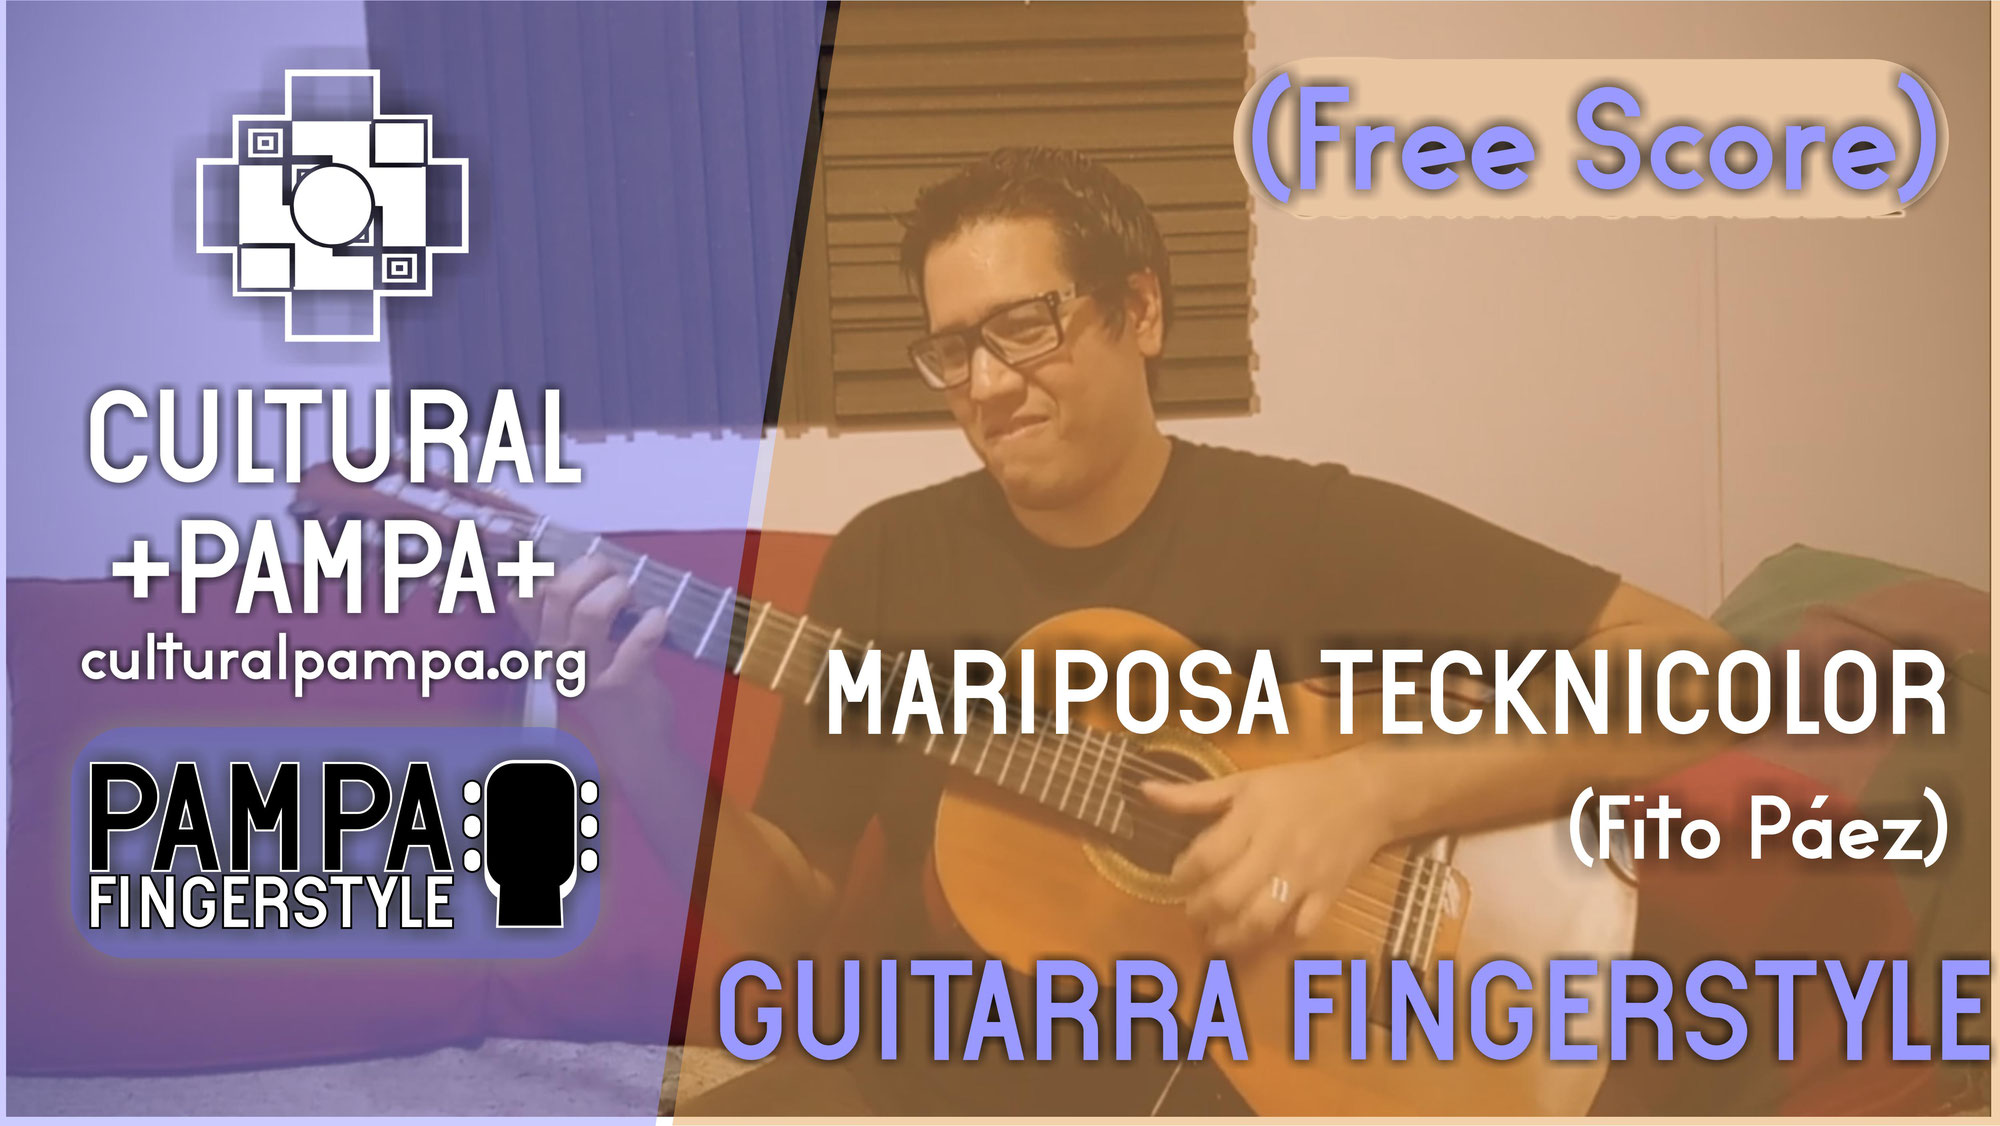 Mariposa Tecknicolor | Fito Páez (Guitarra Fingerstyle)